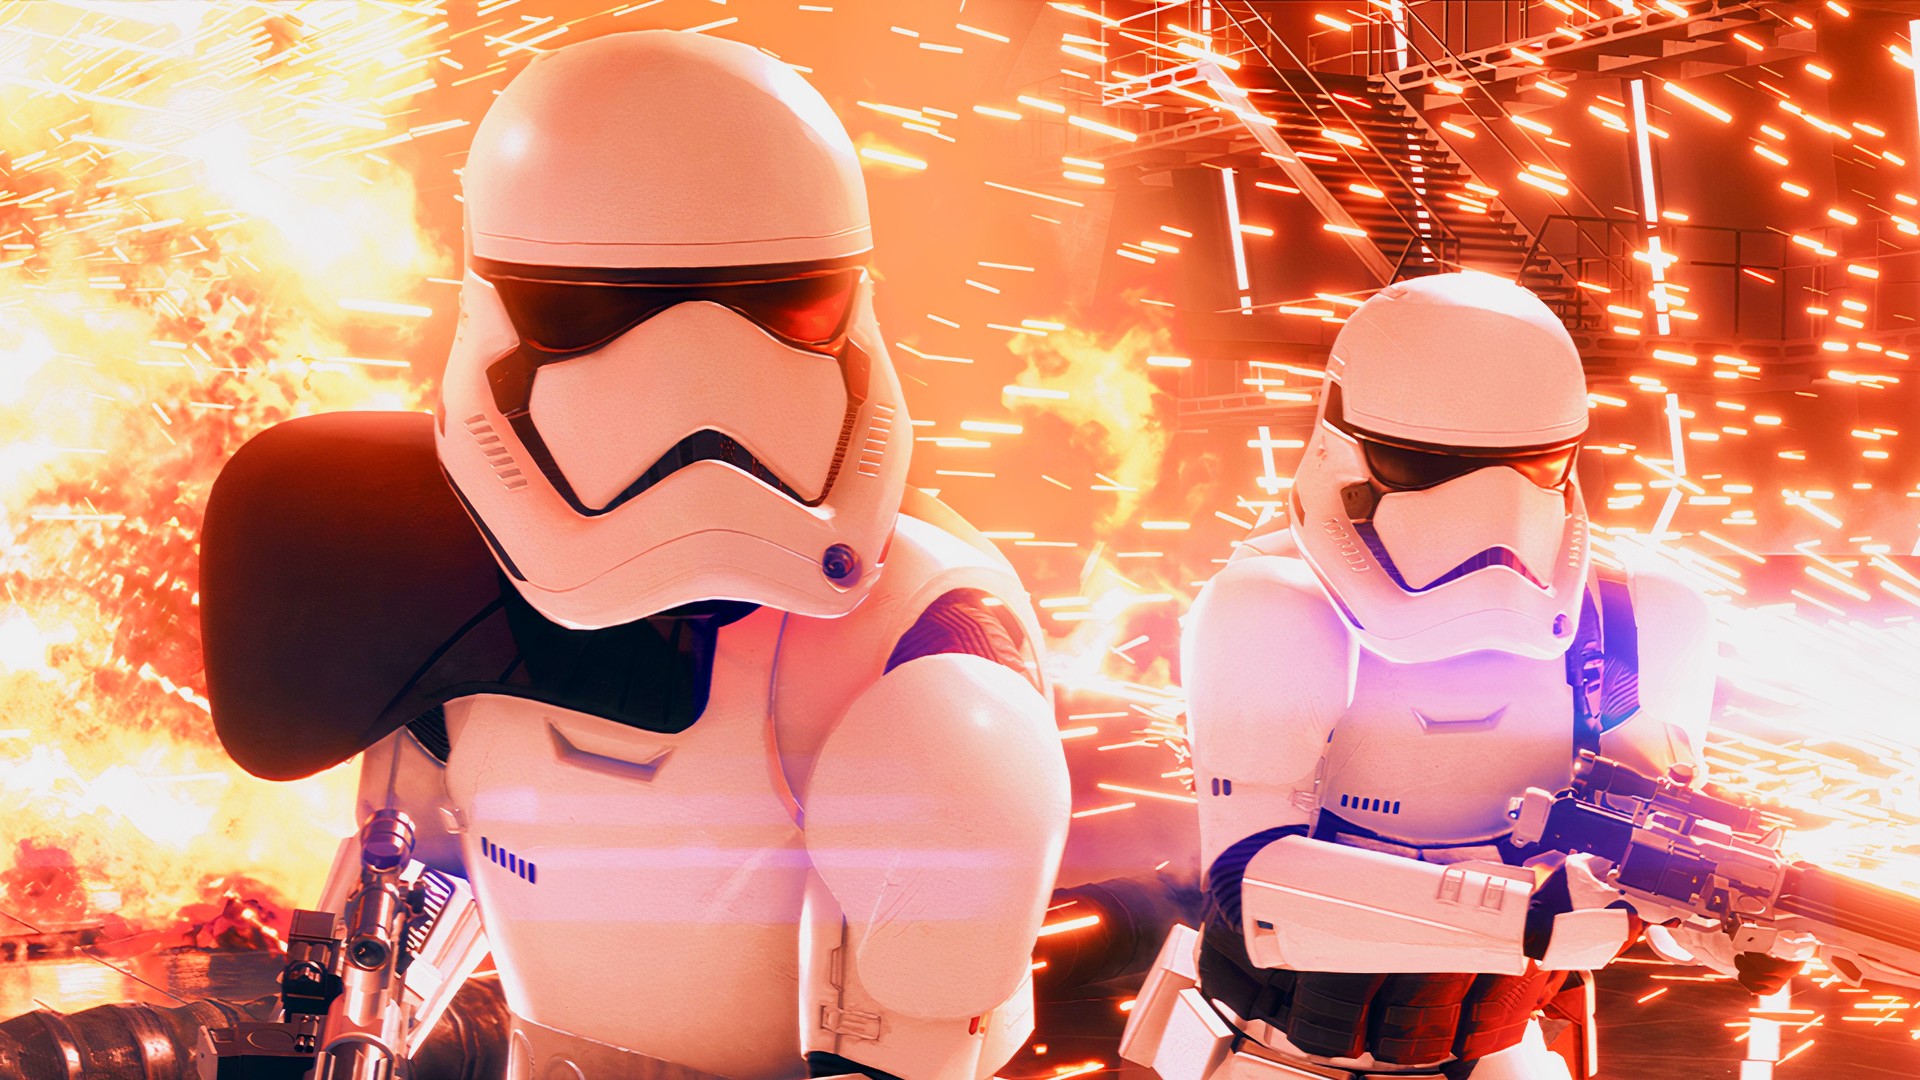 Star Wars VR game in the works, as EA’s Battlefront 2 gets modded